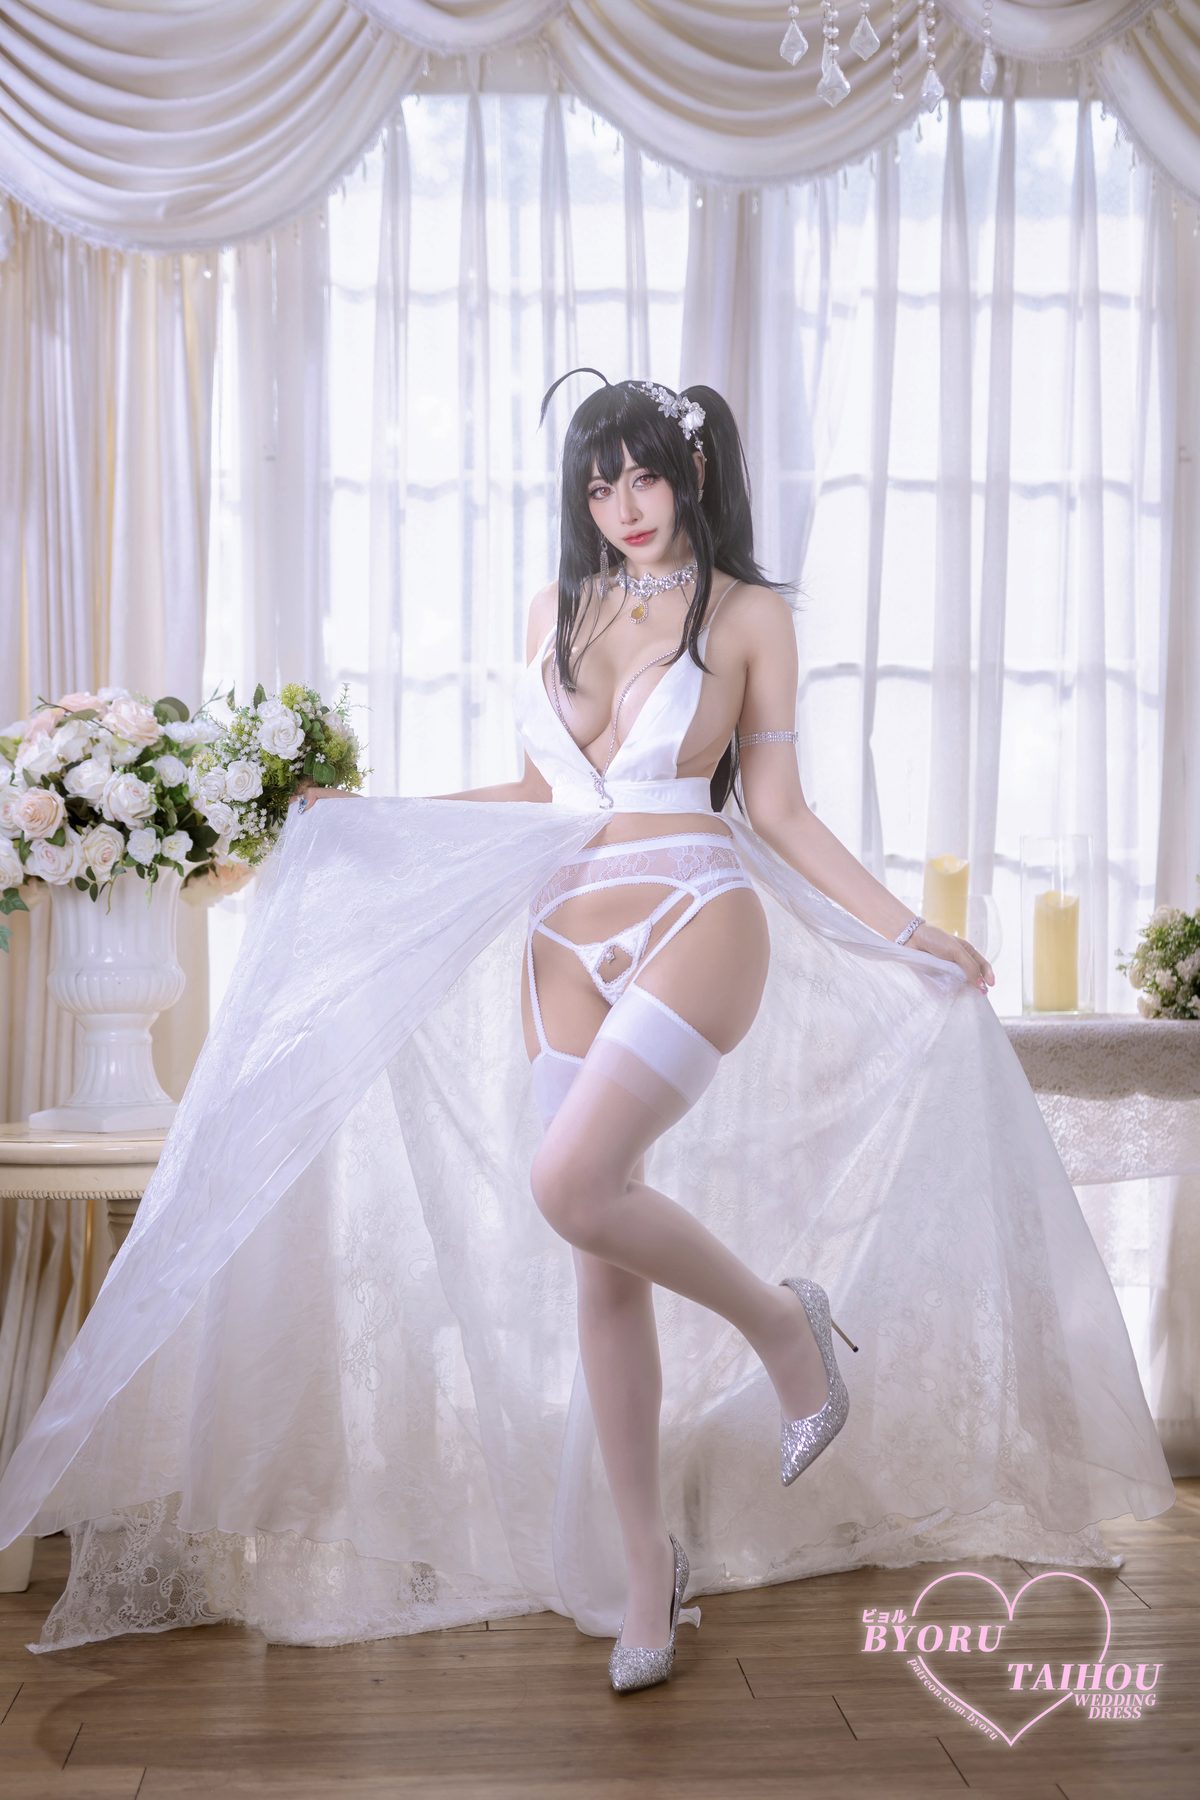 Coser@Byoru Taihou Wedding Dress 0012 3175004667.jpg